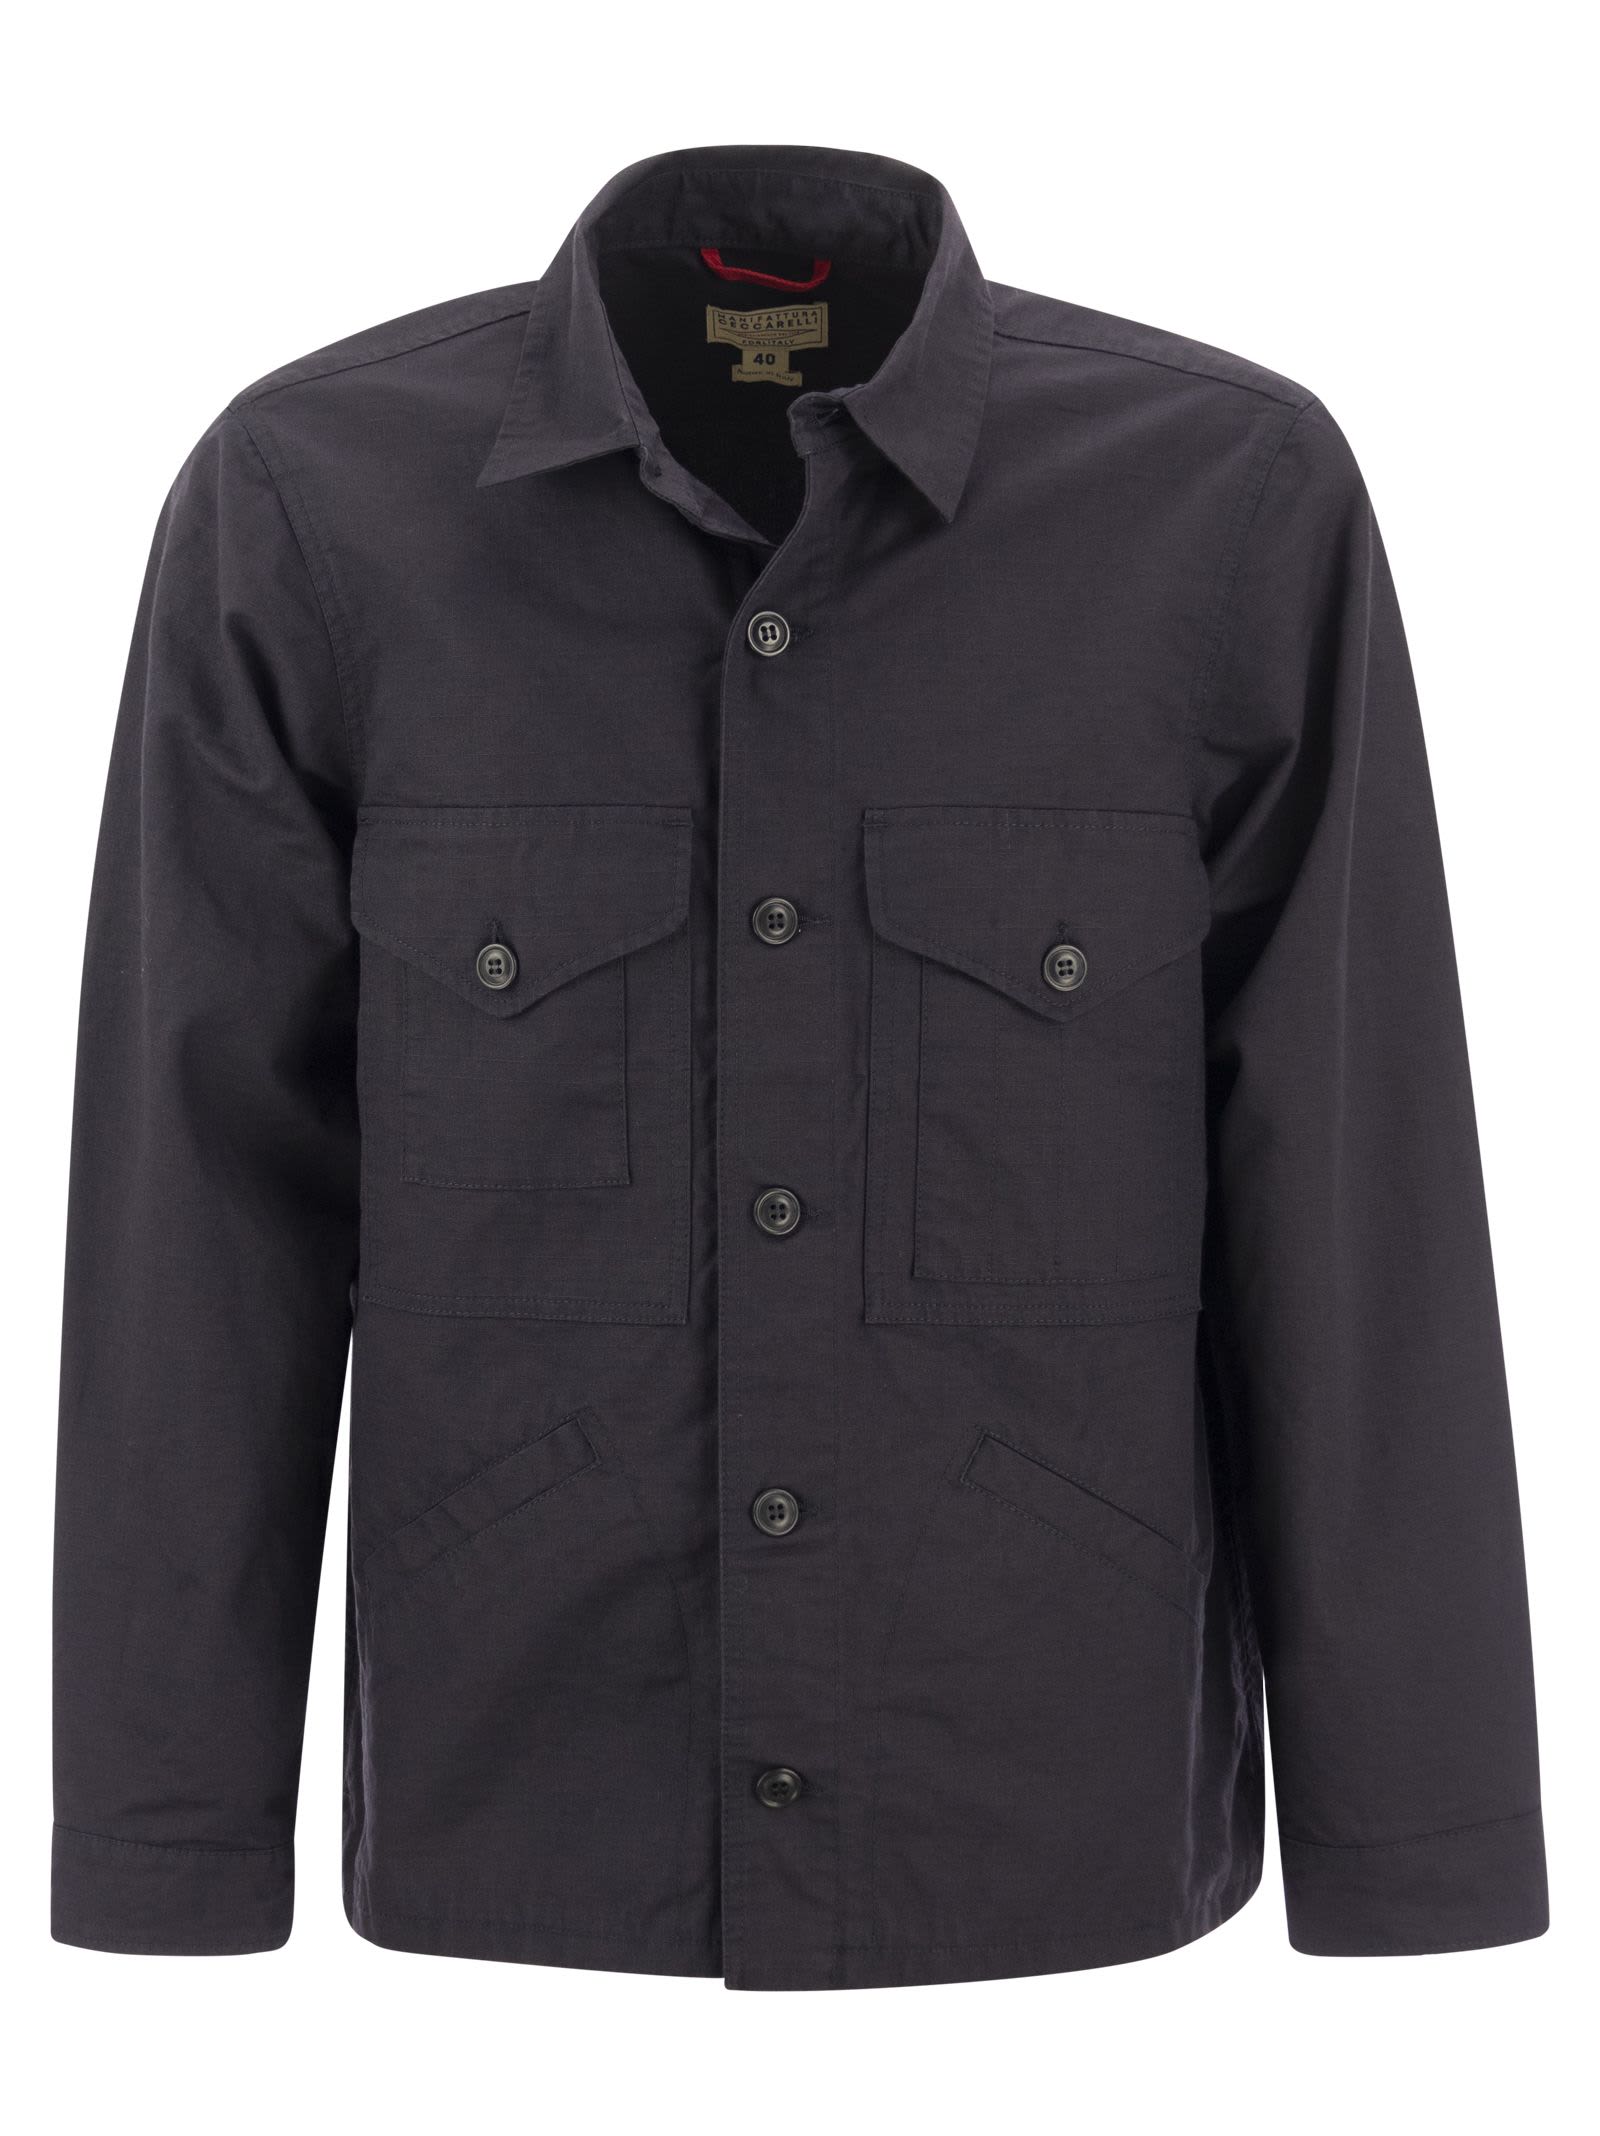 Manifattura Ceccarelli Cruiser - Multi-pocket Shirt-jacket